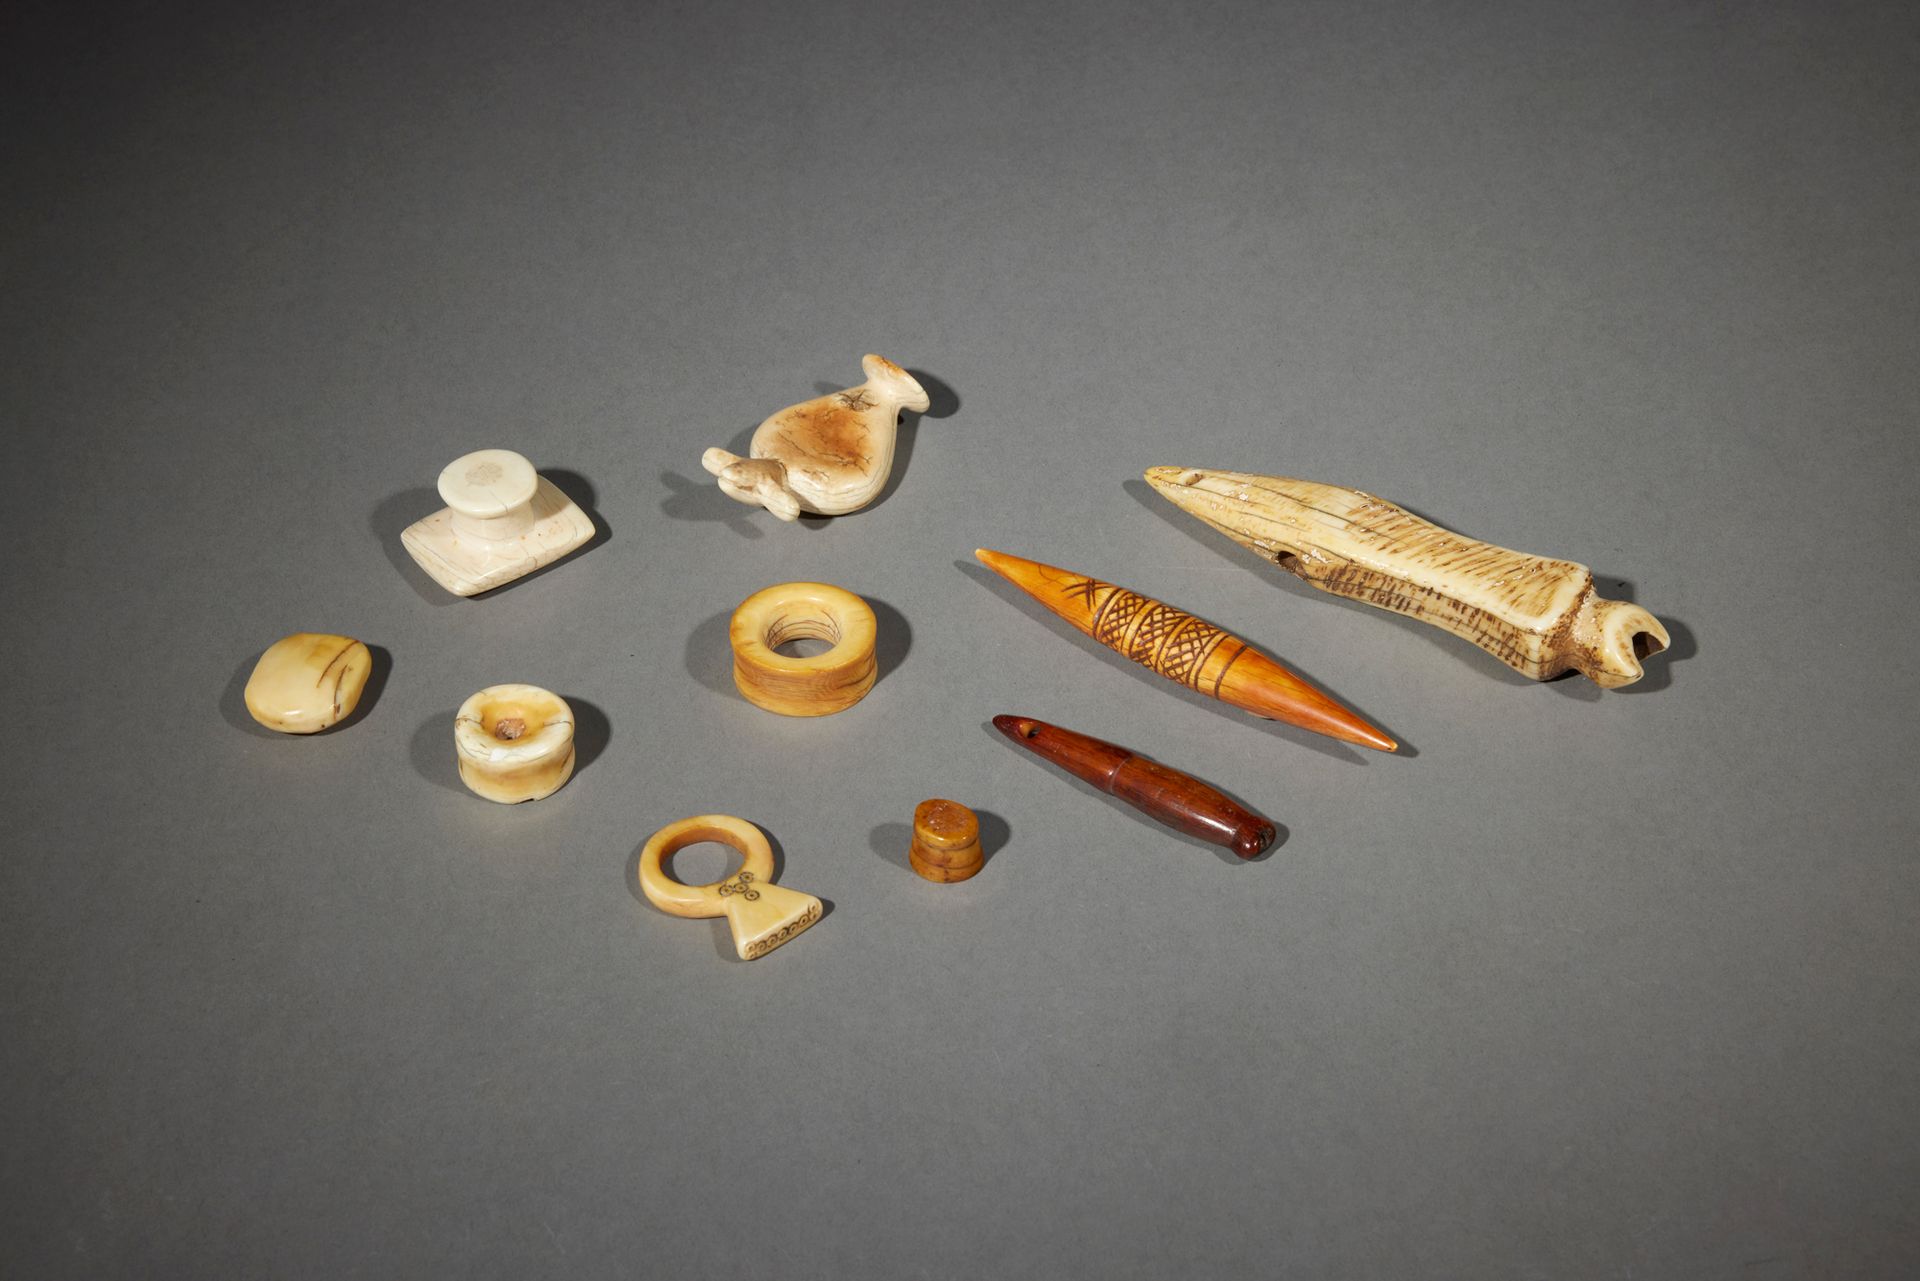 Null 十个装饰品

Dinka

苏丹

象牙色

长1.5至11厘米



一套10件象牙制品，包括6个唇印，2个吊坠，1个戒指和1个不明的锥形物。